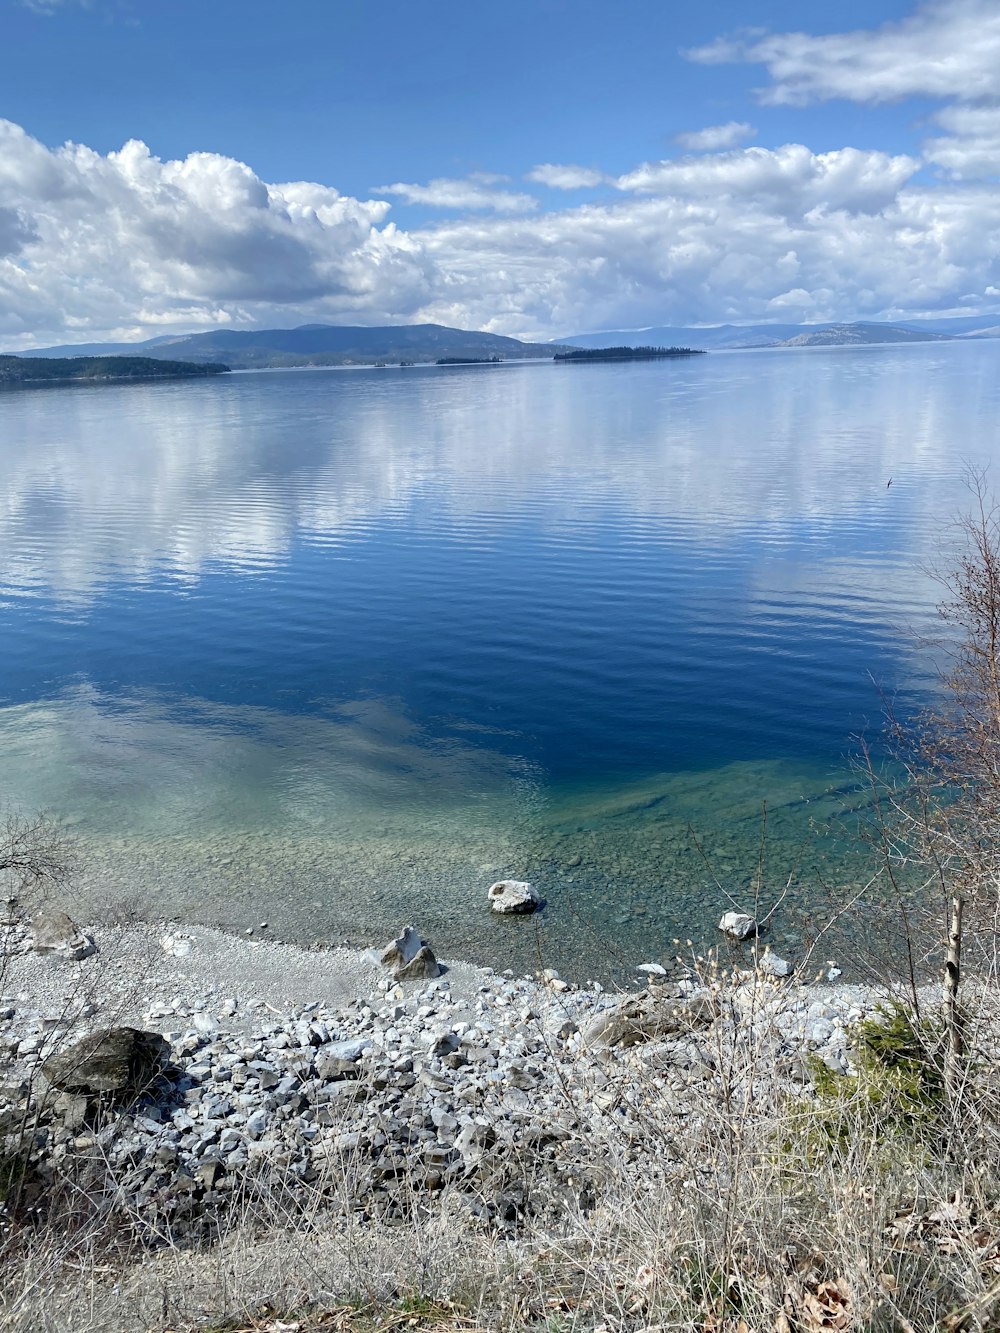 blue calm water near gray rocks during daytime